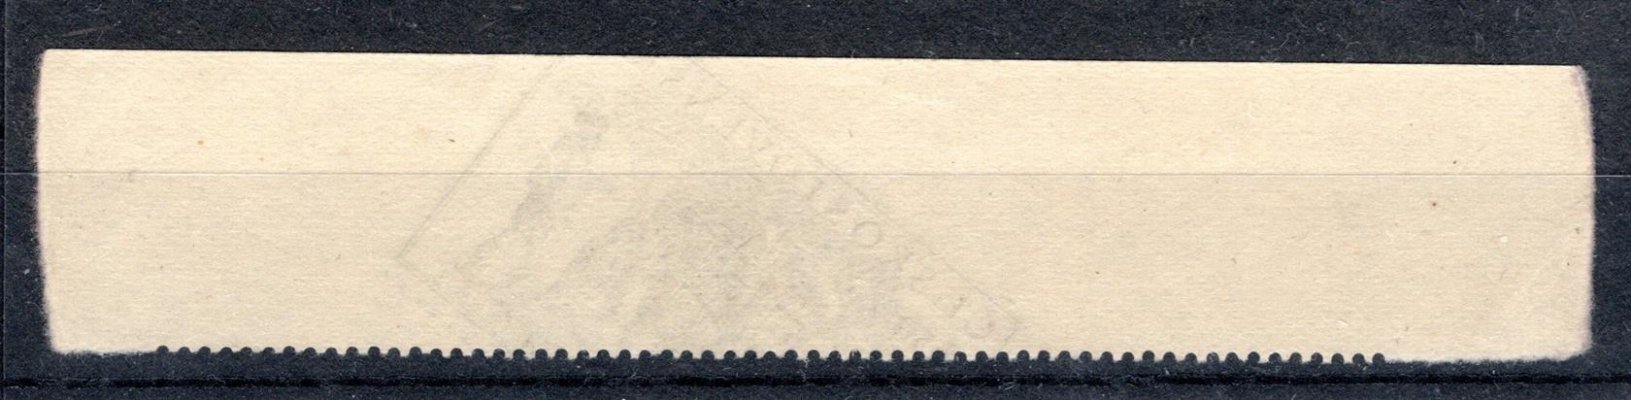 558, výstava Praga 50, šikmý otisk známky 1,50 Kč  na okraji tiskového listu, zajímavé